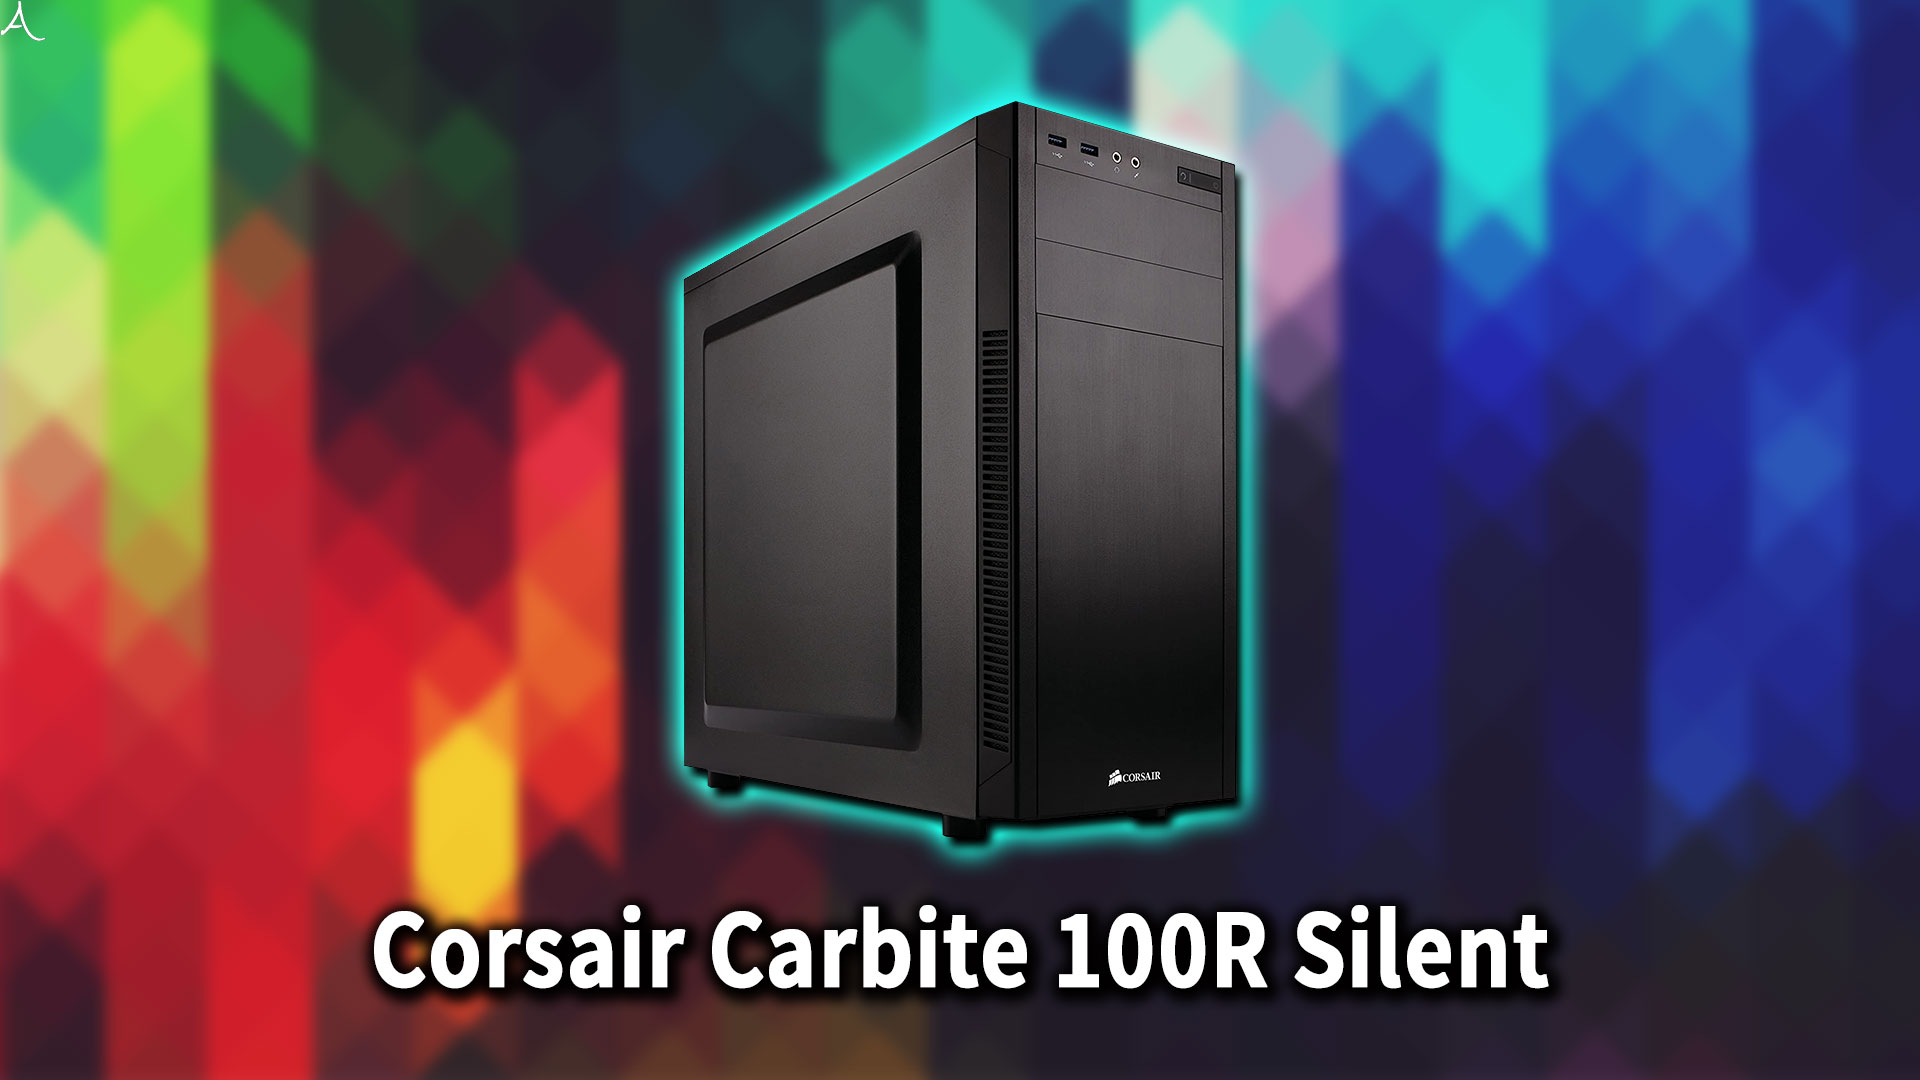 ｢Corsair Carbide 100R Silent｣のサイズ・大きさはどれくらい？